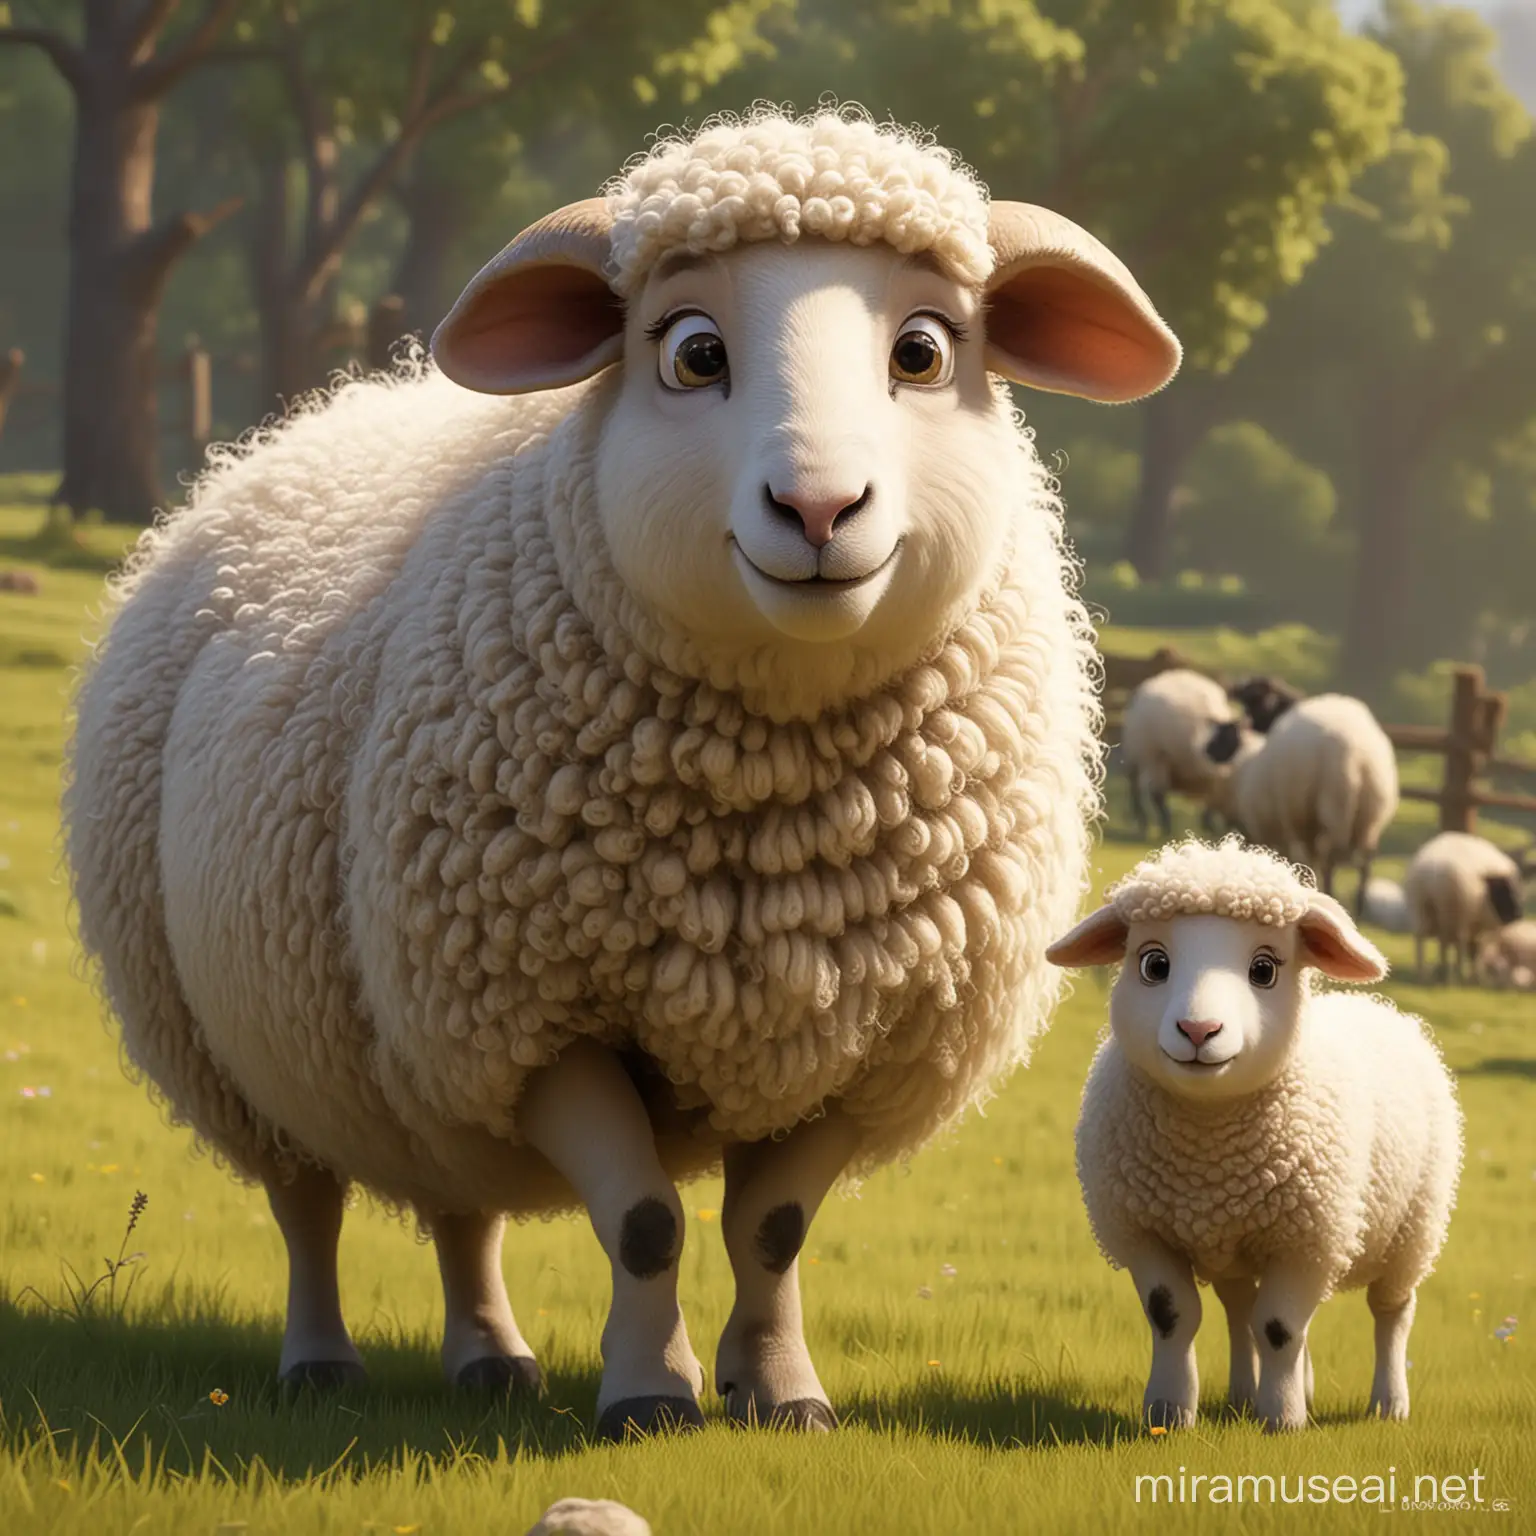 a  mother sheep  ,disney pixar style